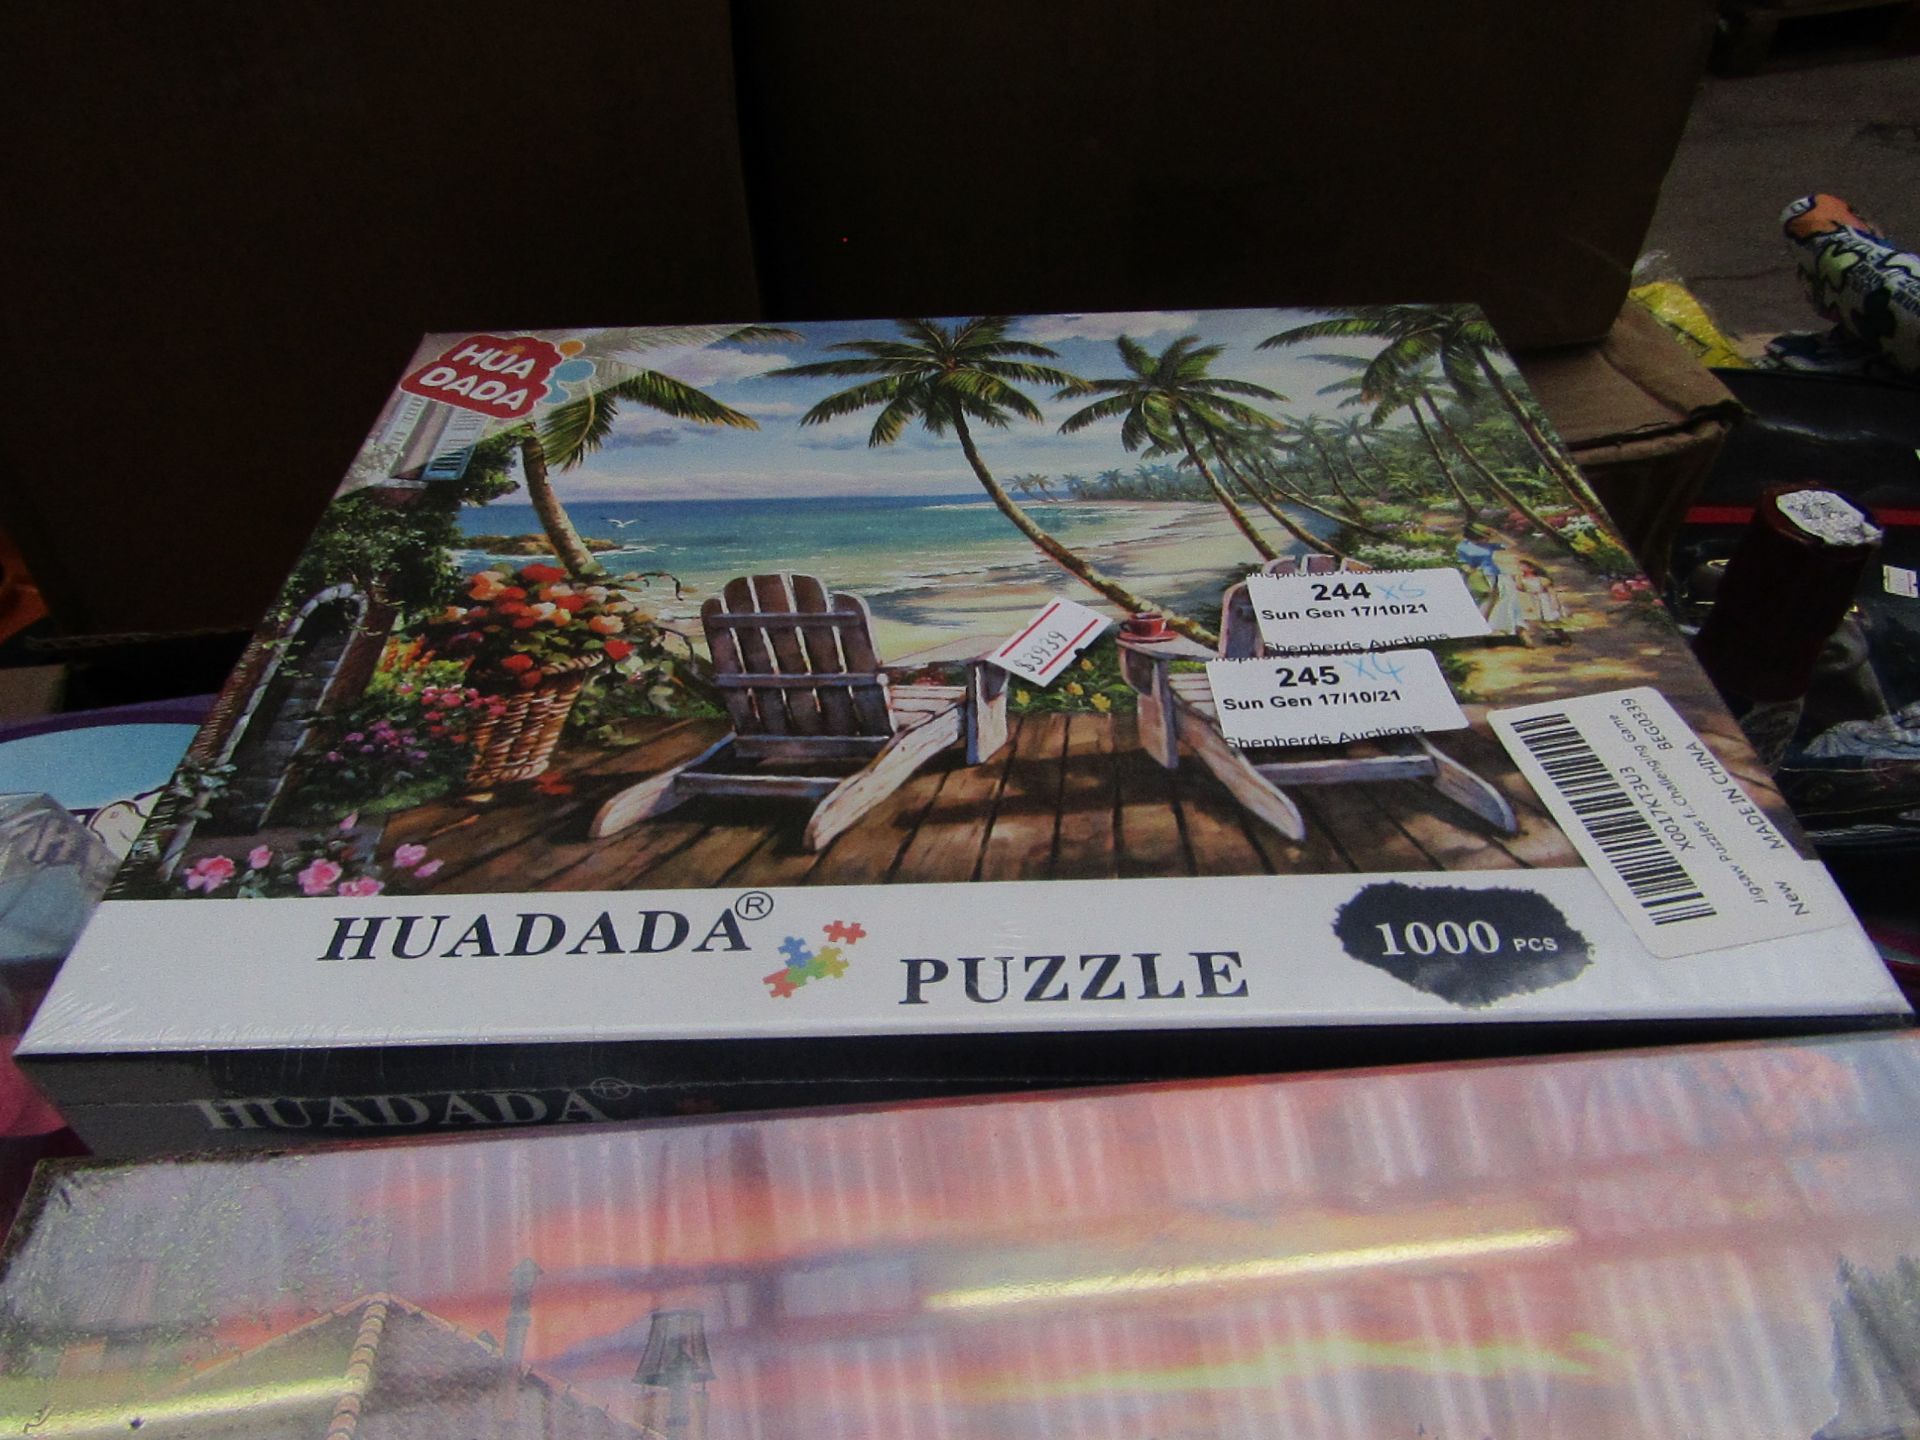 5x Huadada 1000 Piece Jigsaw Puzzle - New & Boxed.